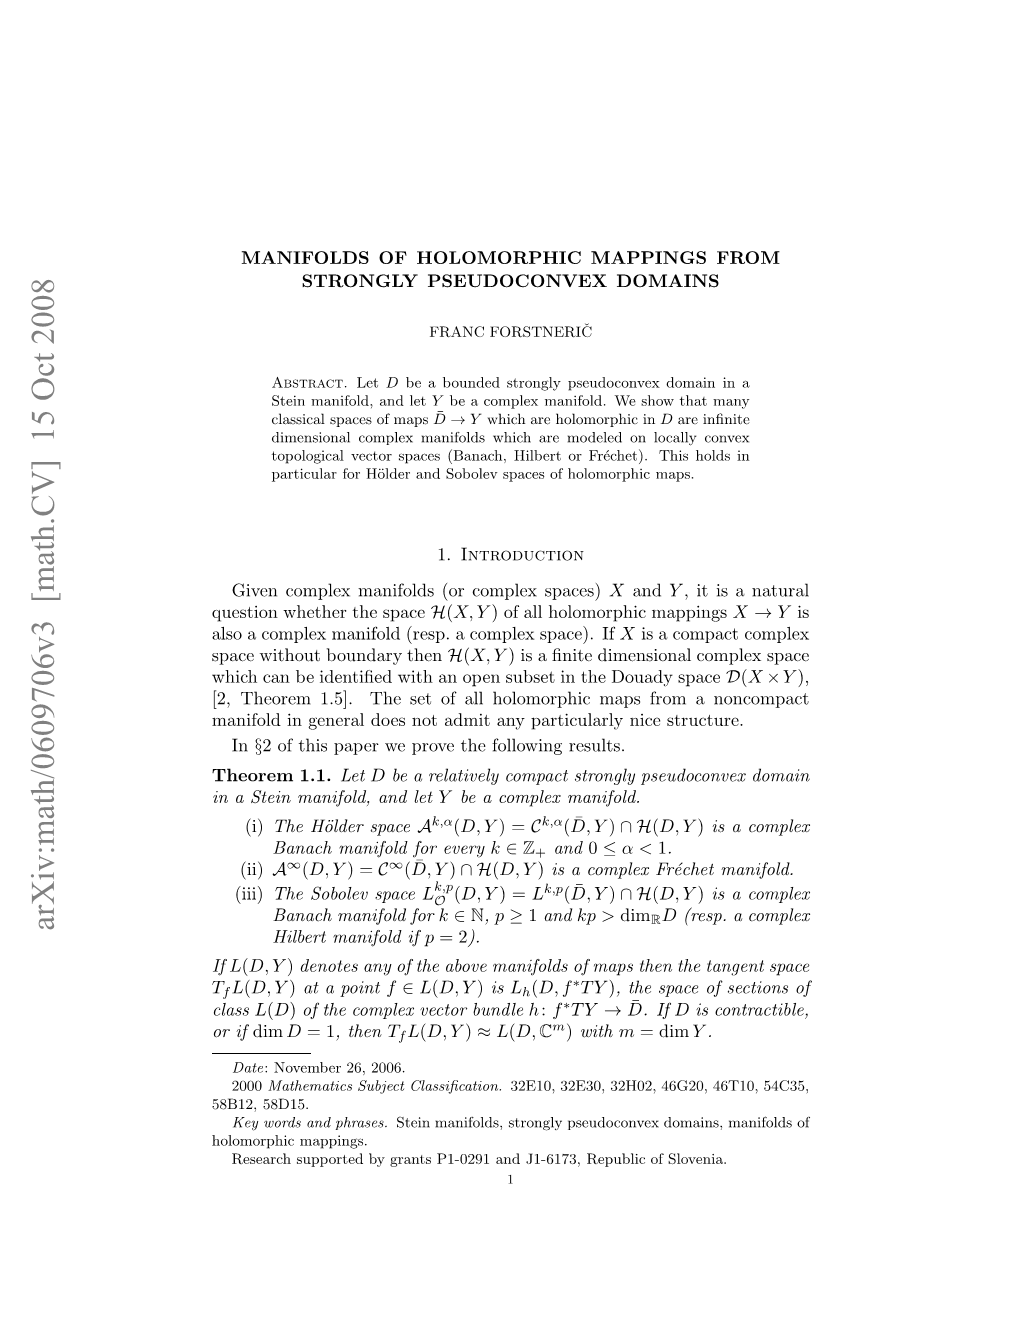 [Math.CV] 15 Oct 2008 T If Class Nasenmnfl,Adlet and Manifold, Stein a in Hoe 1.1